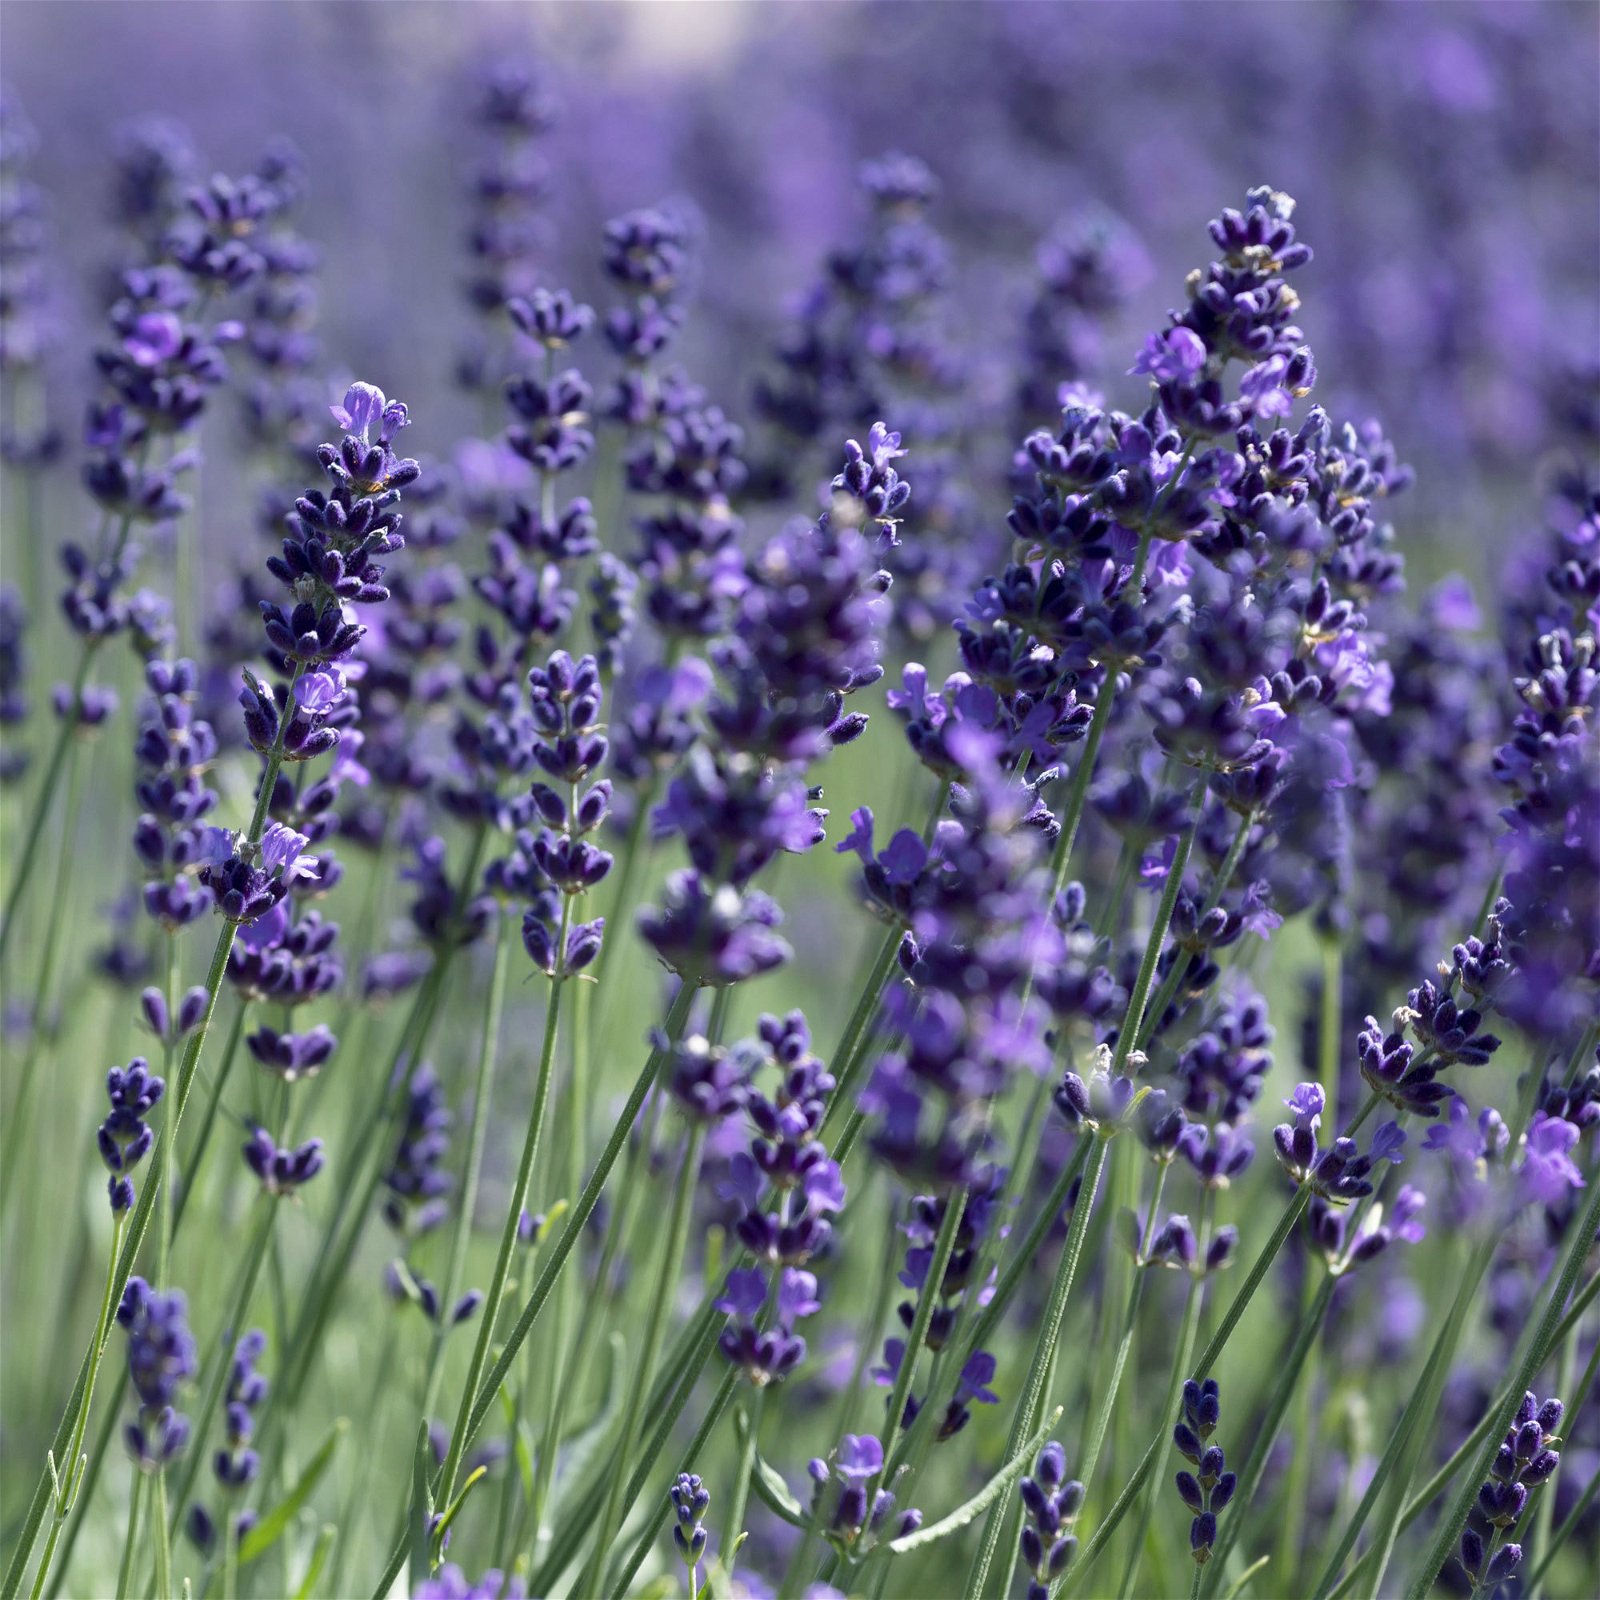 Lavendel 'Hidcote Blue', dunkel-blauviolett, Topf-Ø 23 cm